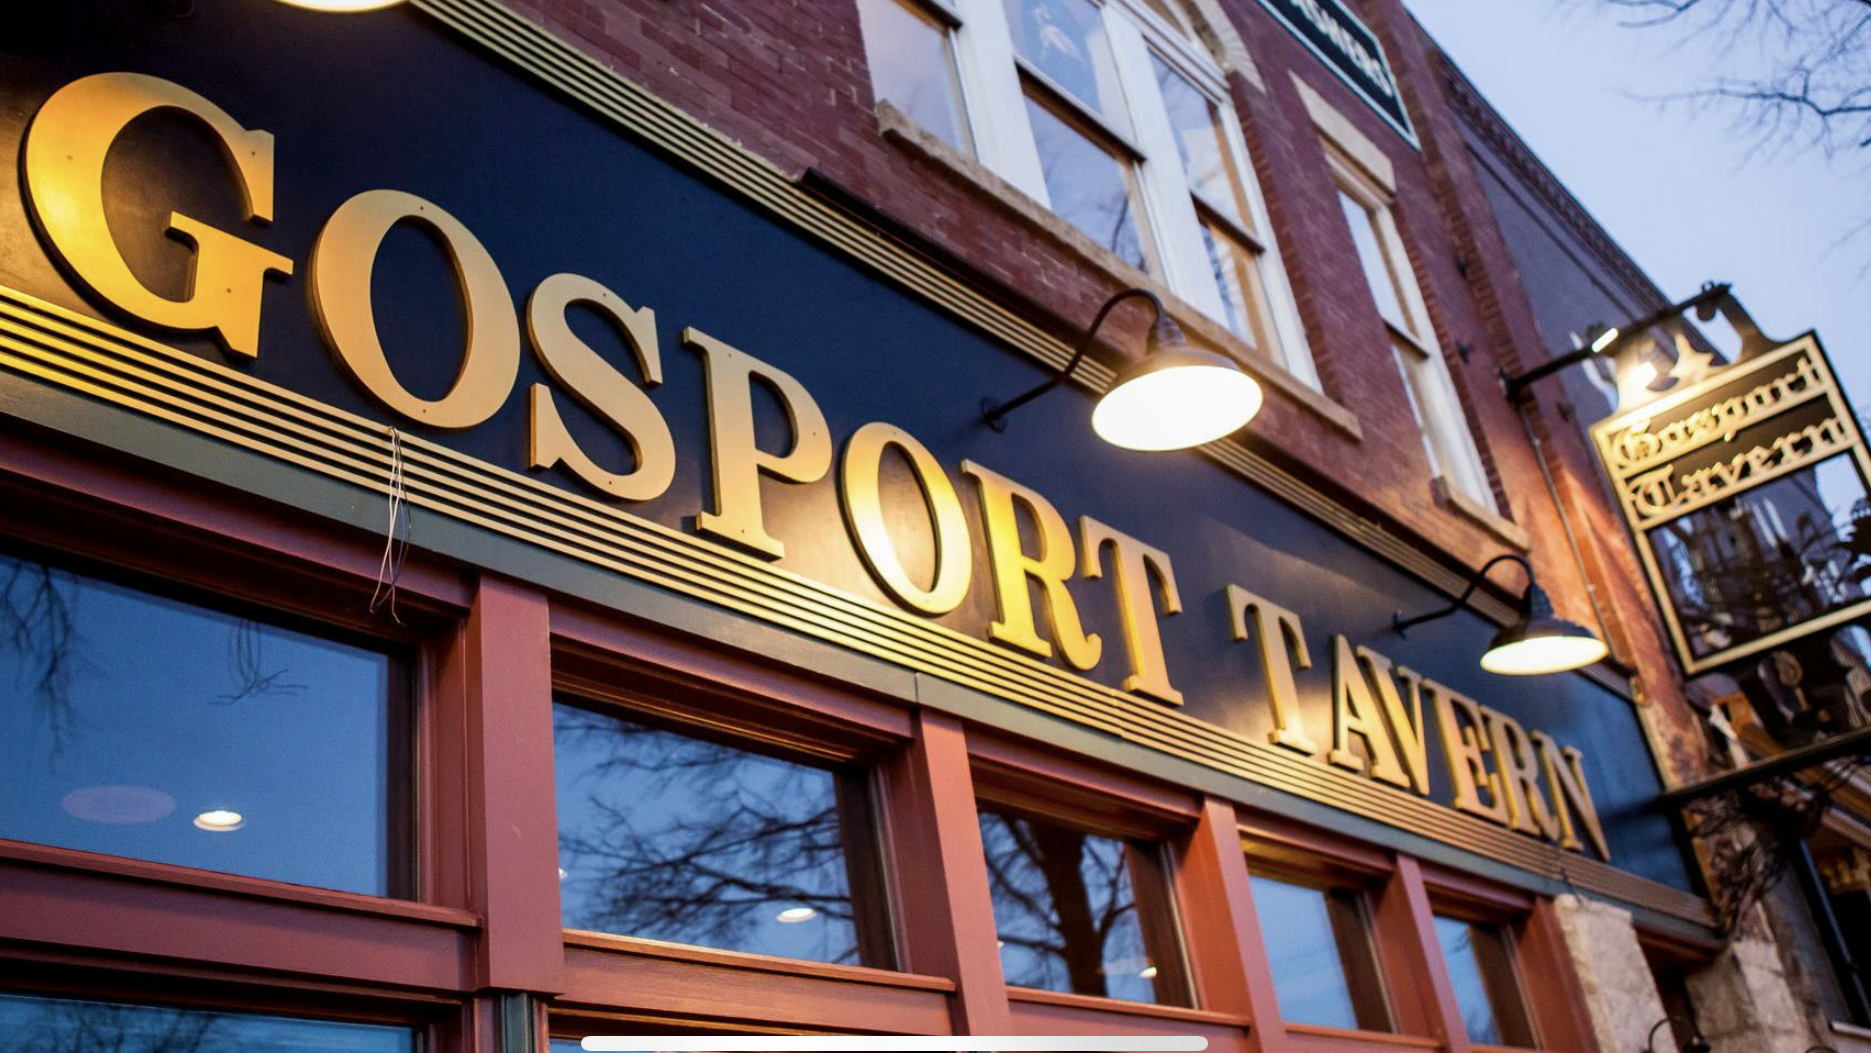 Gosport Tavern